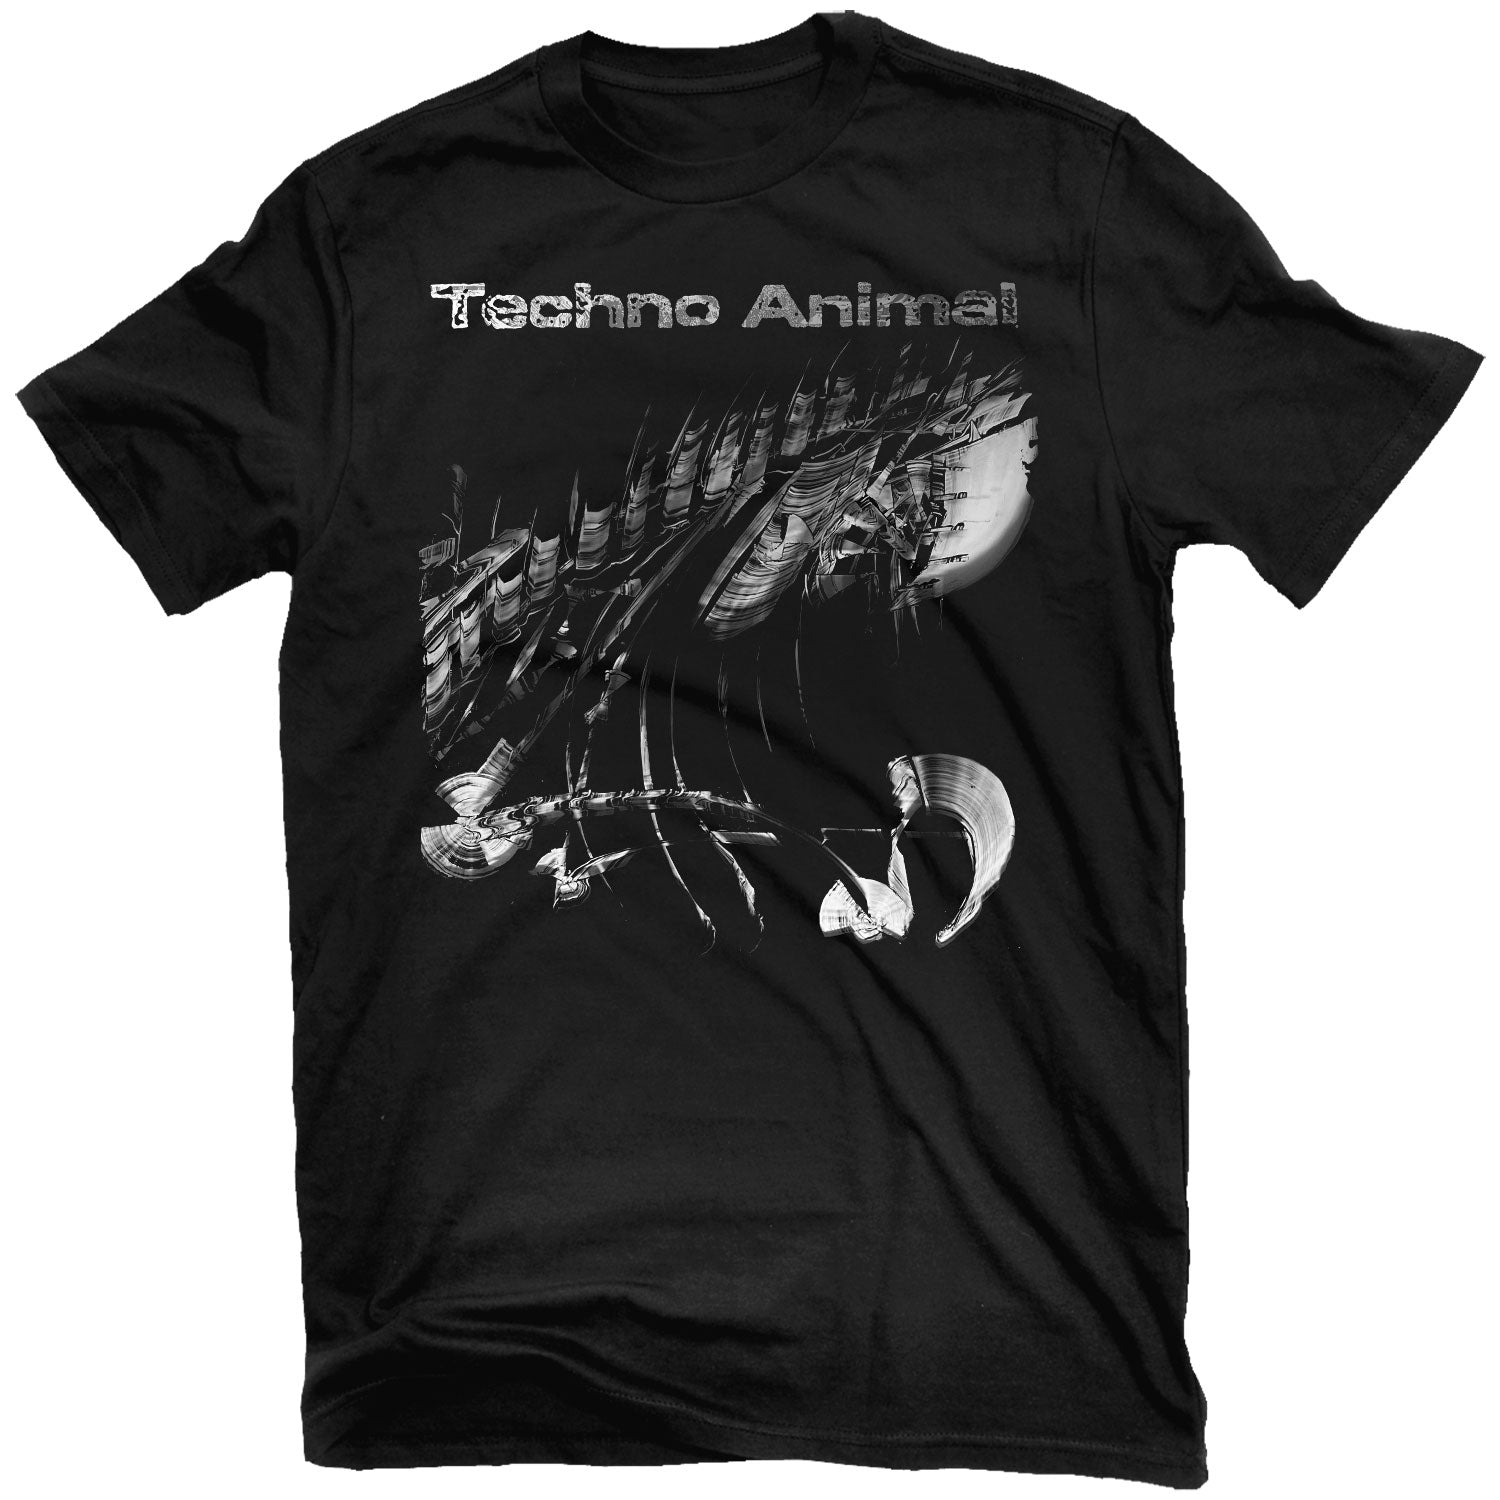 Techno Animal "Re-Entry" T-Shirt